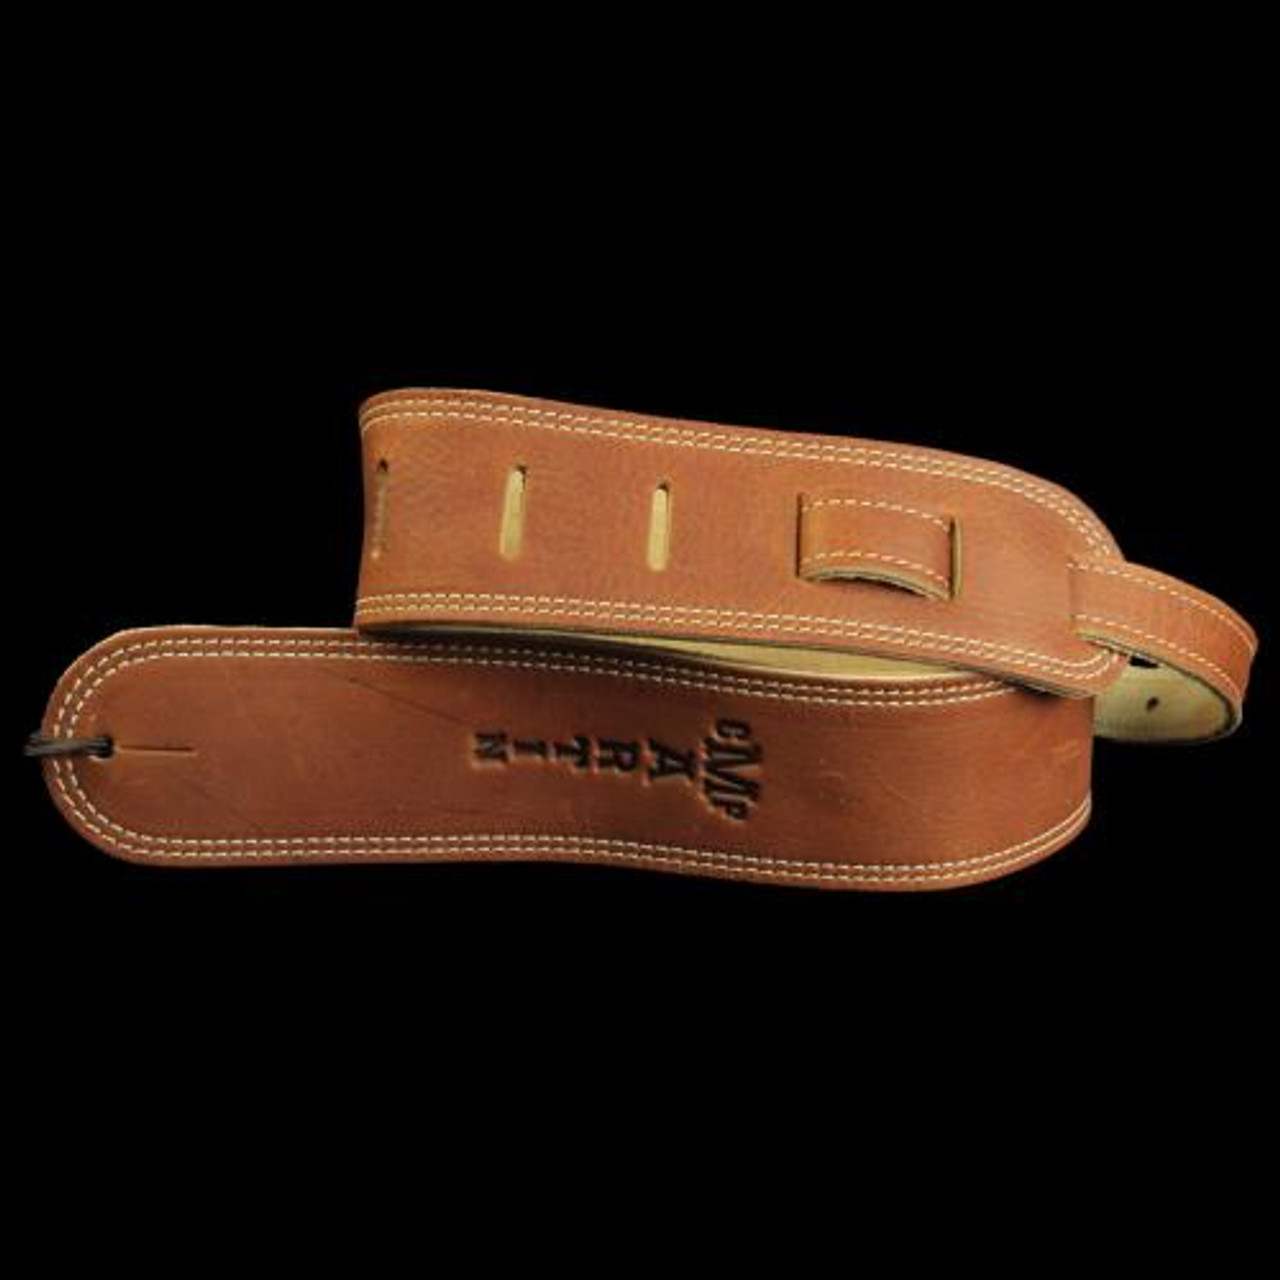 CF Martin Ball Glove Premium Leather Guitar Strap 18A0012 Brown